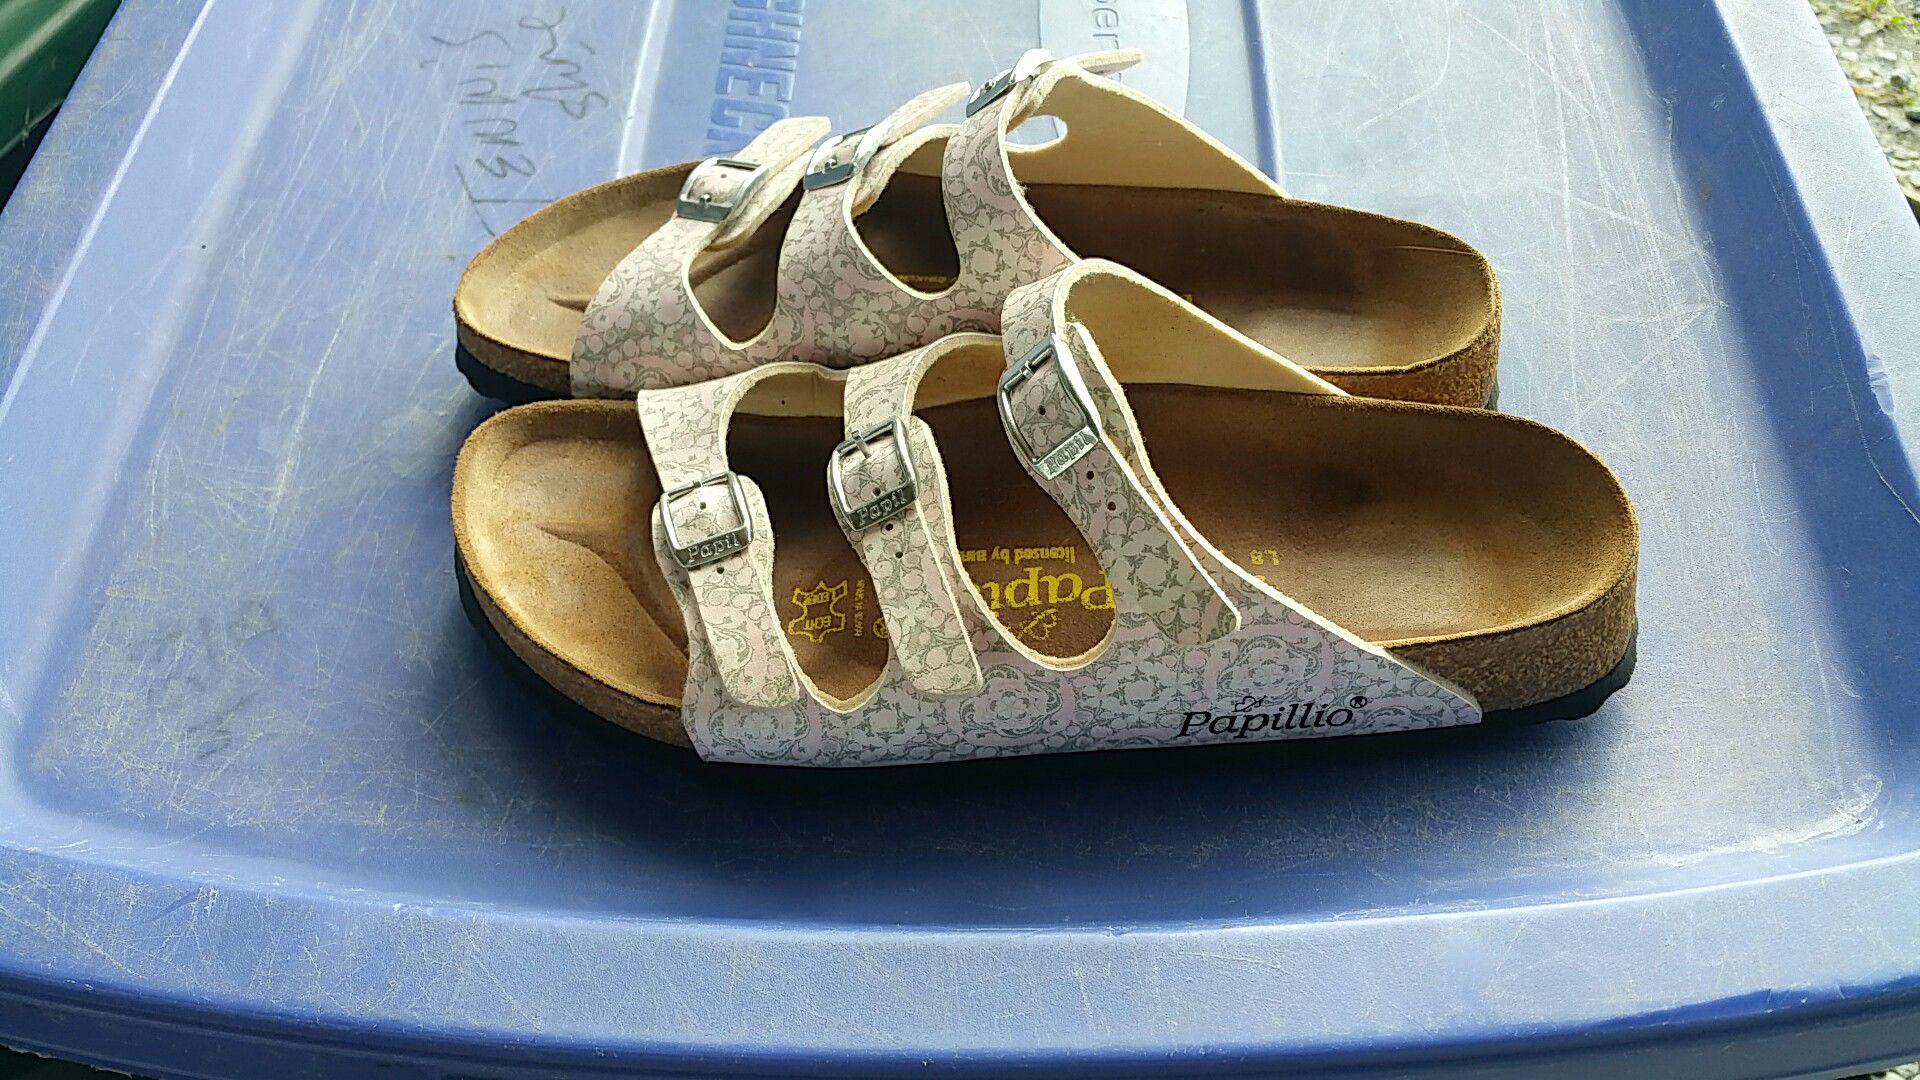 Pair of Papillio sandals by Birkenstock